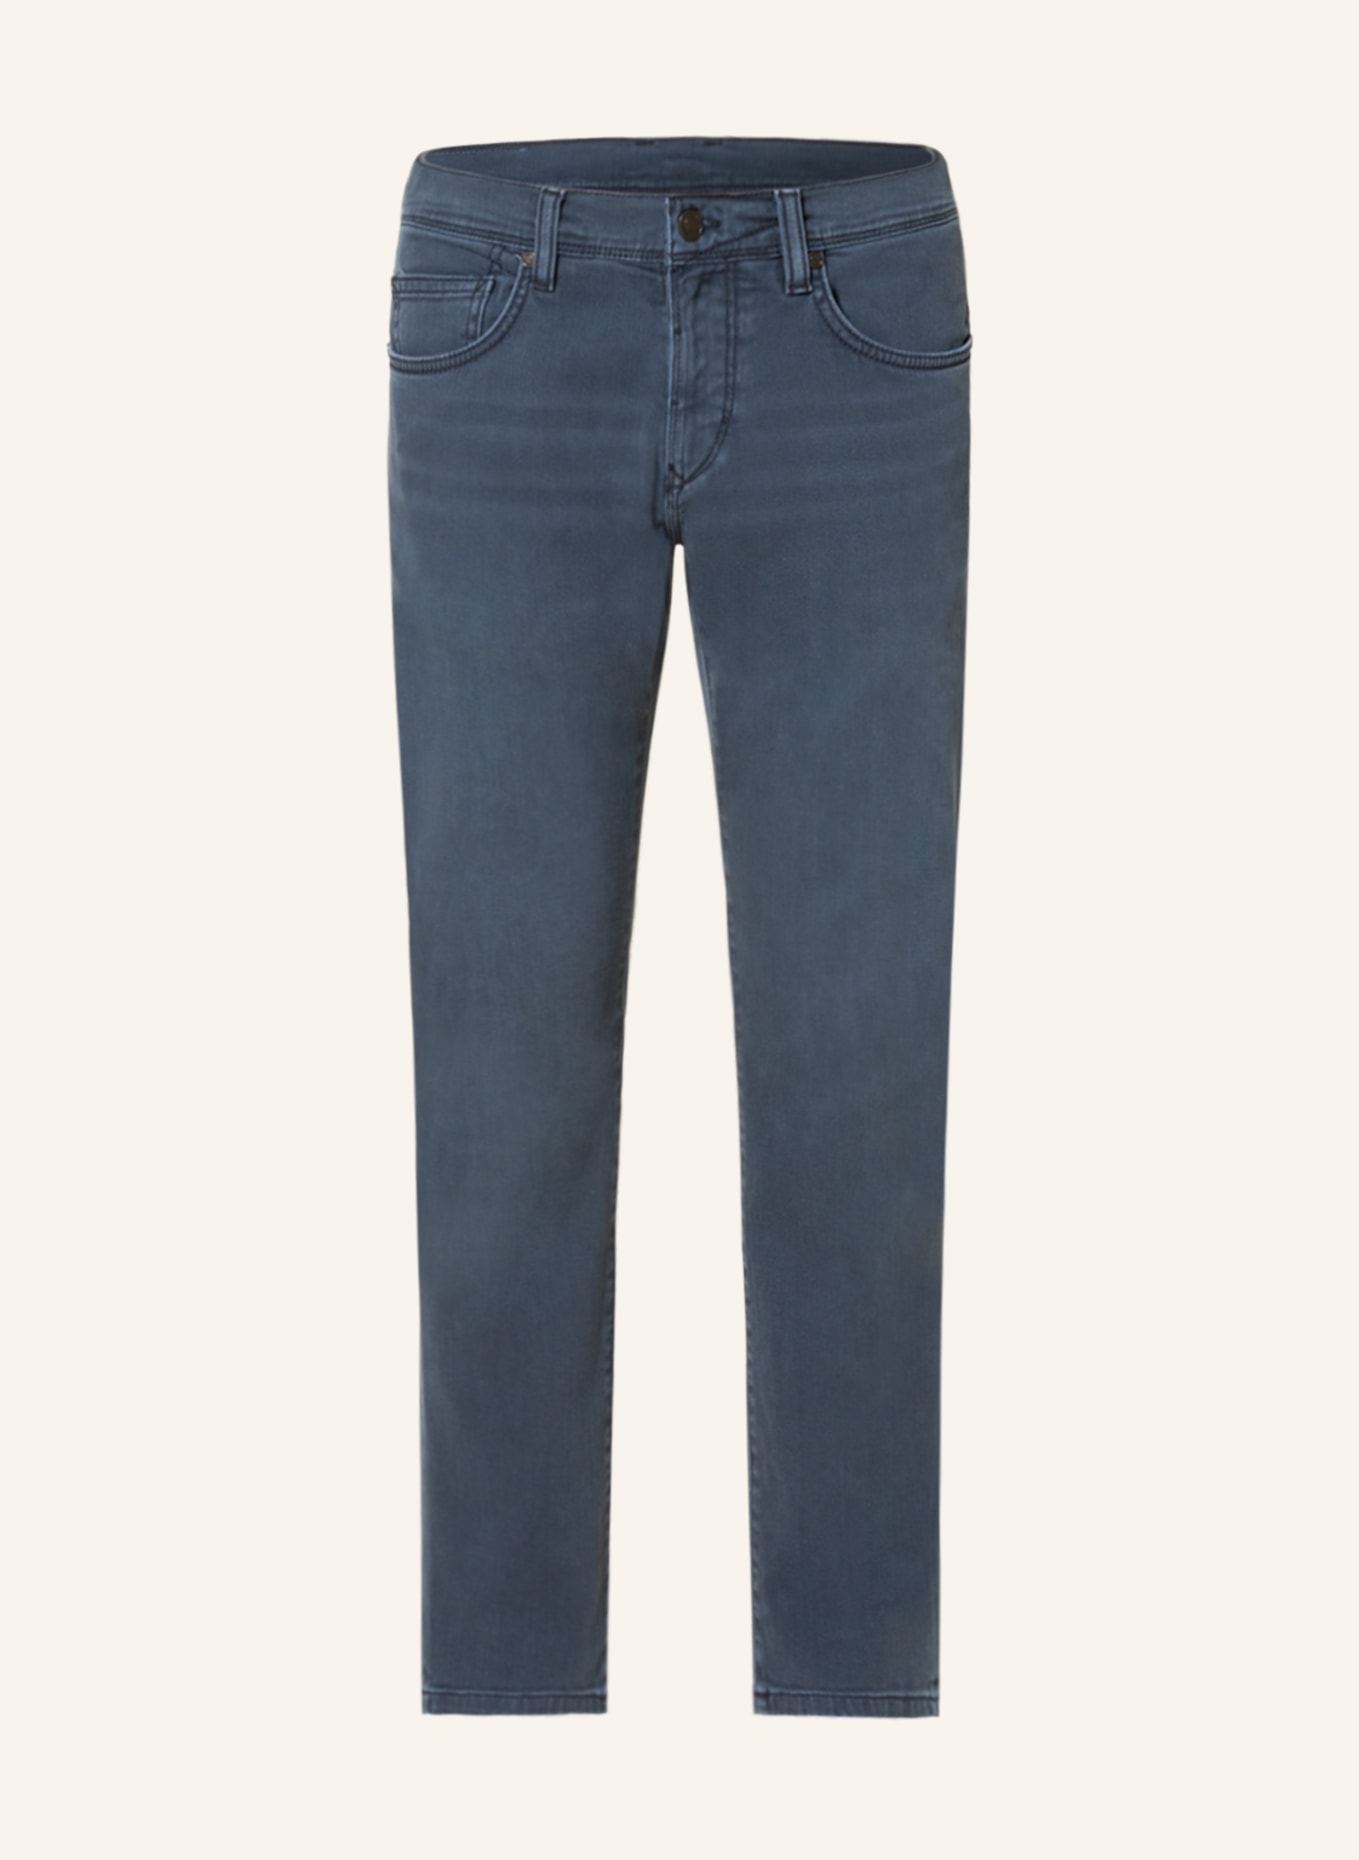 BALDESSARINI Jeans Tapered Fit, Farbe: 6811 dark blue stonewash (Bild 1)